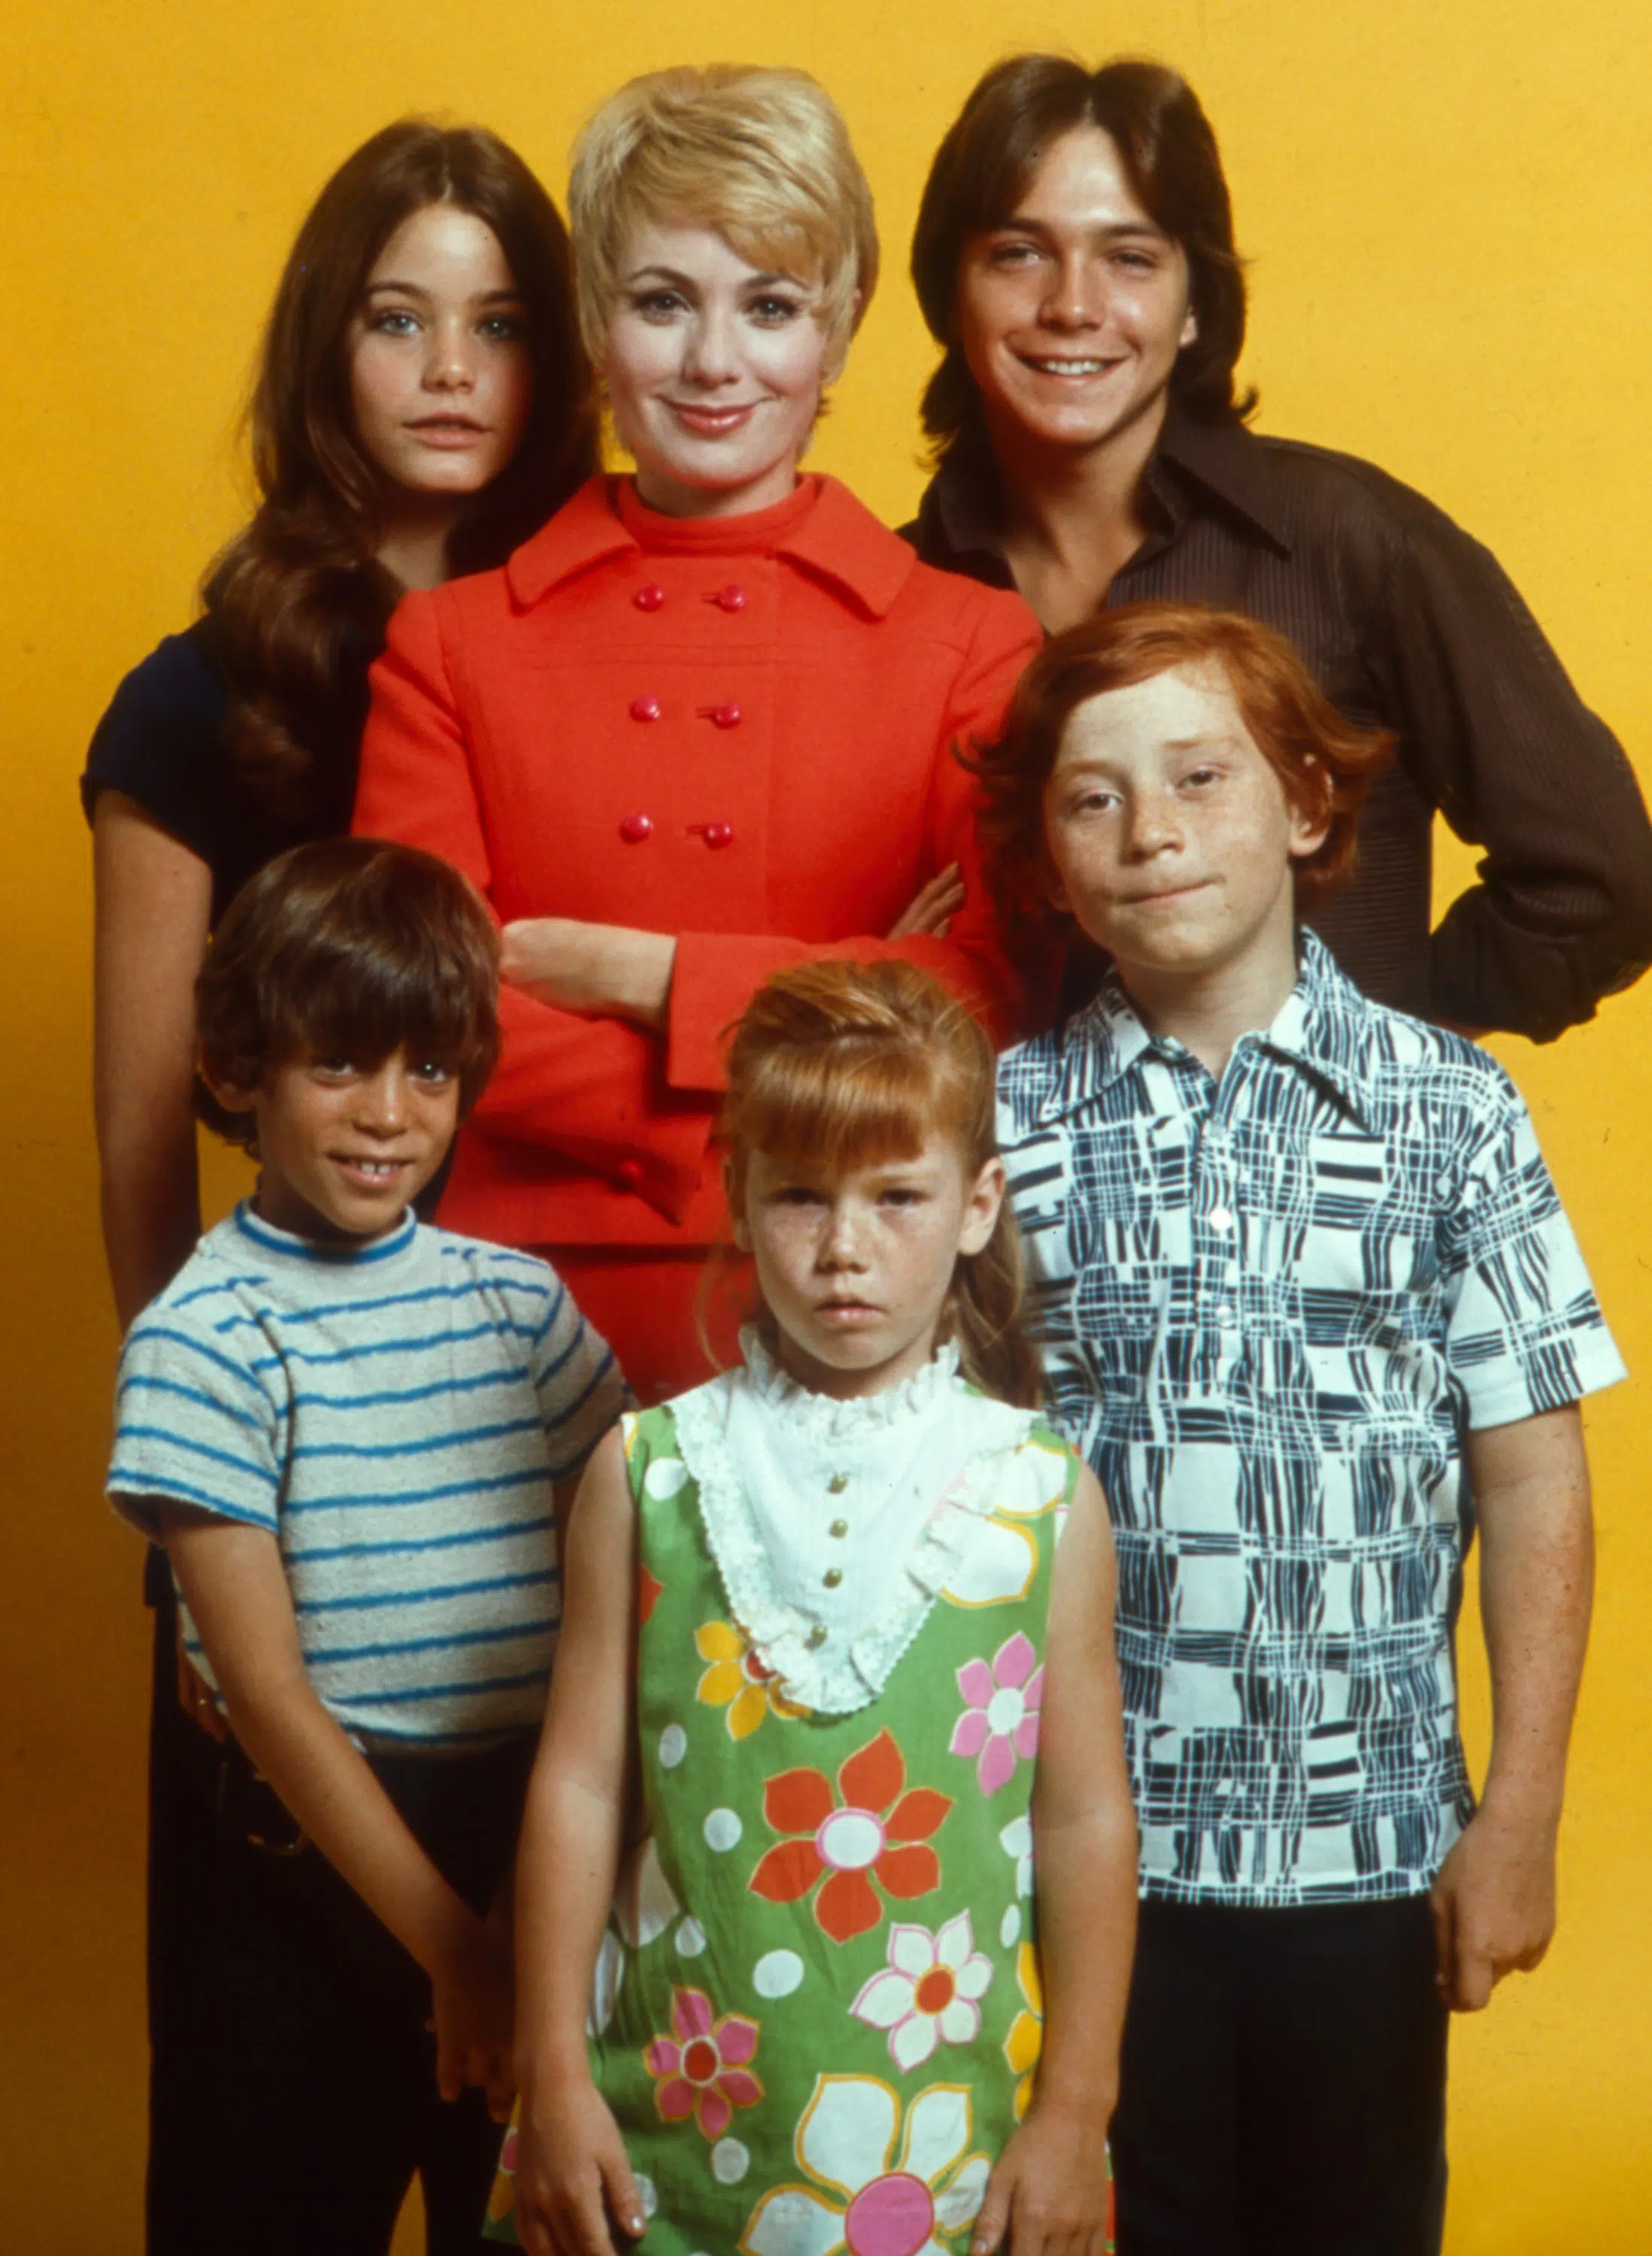 THE PARTRIDGE FAMILY, Clocwise from upper left: Susan Dey, Shirley Jones, David Cassidy, Danny Bonaduce, Suzanne Crough, Jeremy Gelbwaks, 1970-74